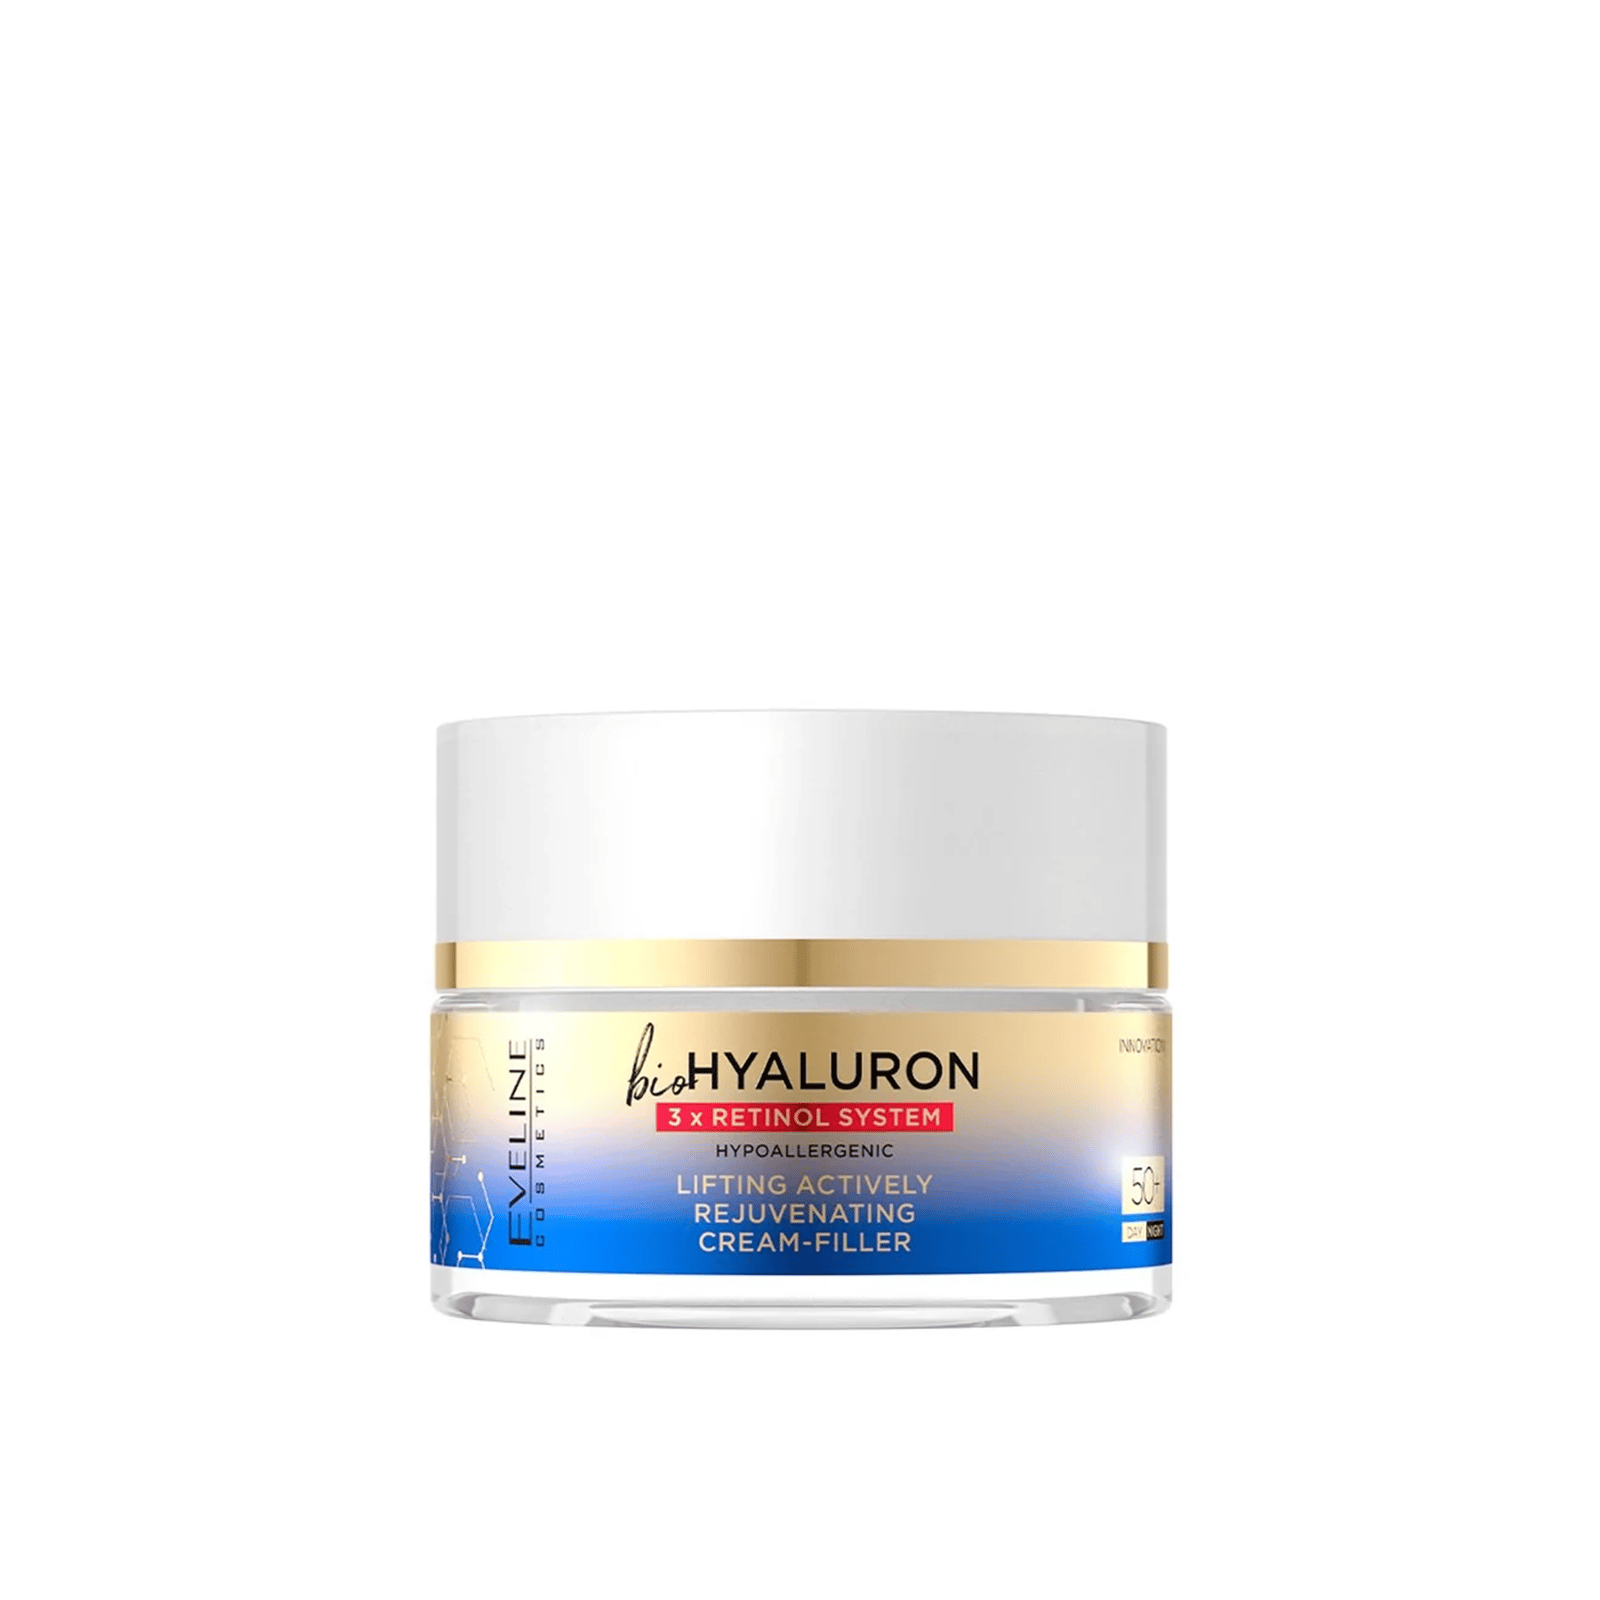 Eveline Cosmetics BioHyaluron 3x Retinol System 50+ Lifting Actively Rejuvenating Cream 50ml